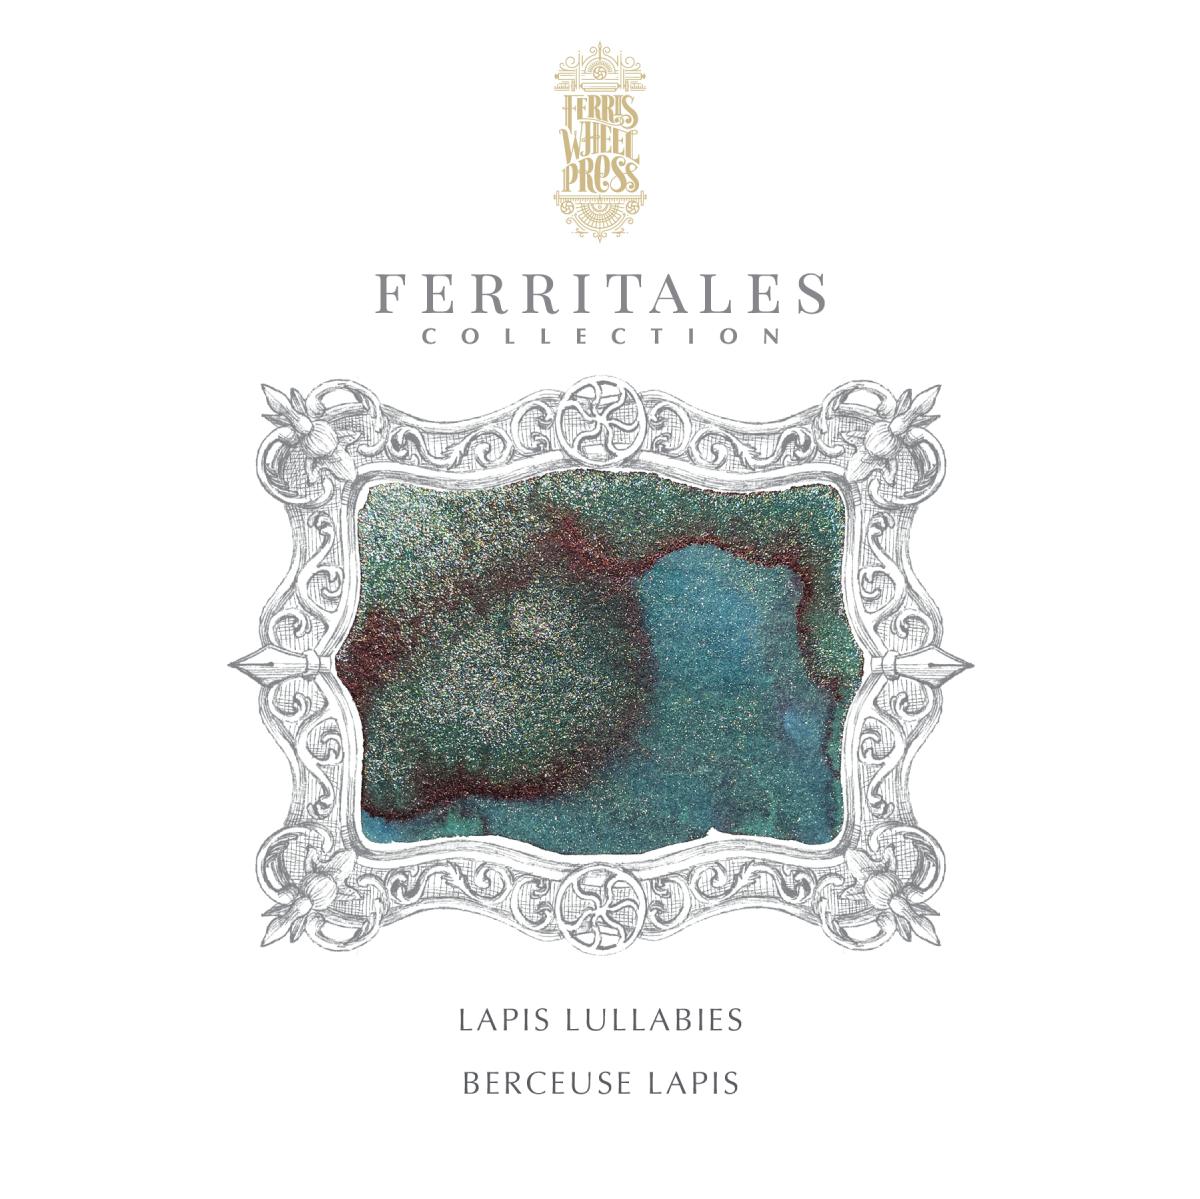 Ferris Wheel Press - Ferritales Ink - Lapis Lullabies, 20 ml